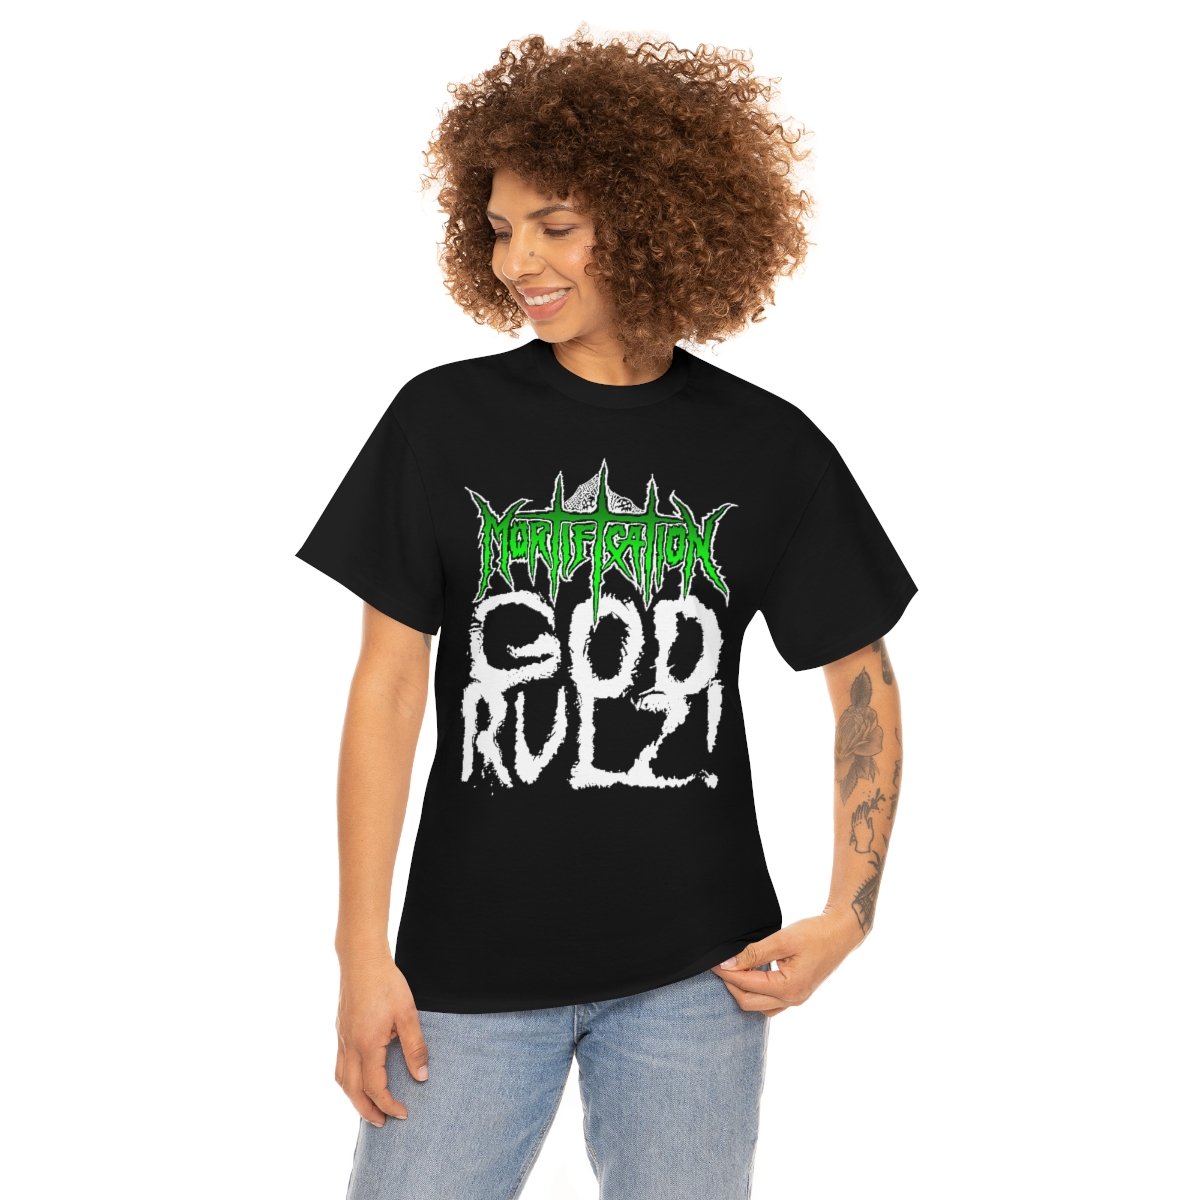 Mortification – God Rulz! Short Sleeve Tshirt (5000)